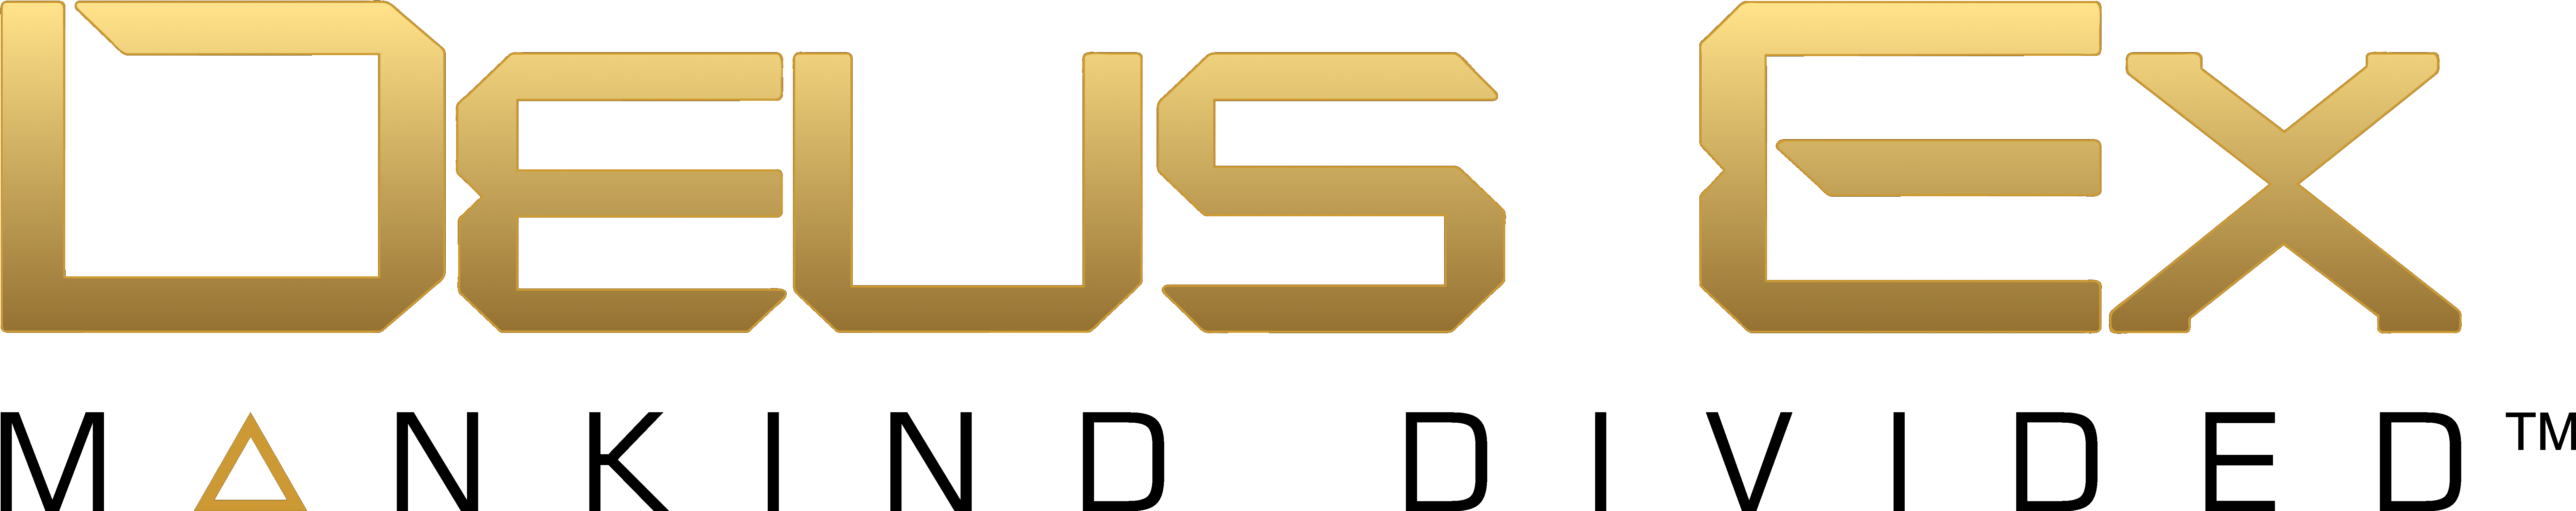 Deus Ex Logo PNG Images HD